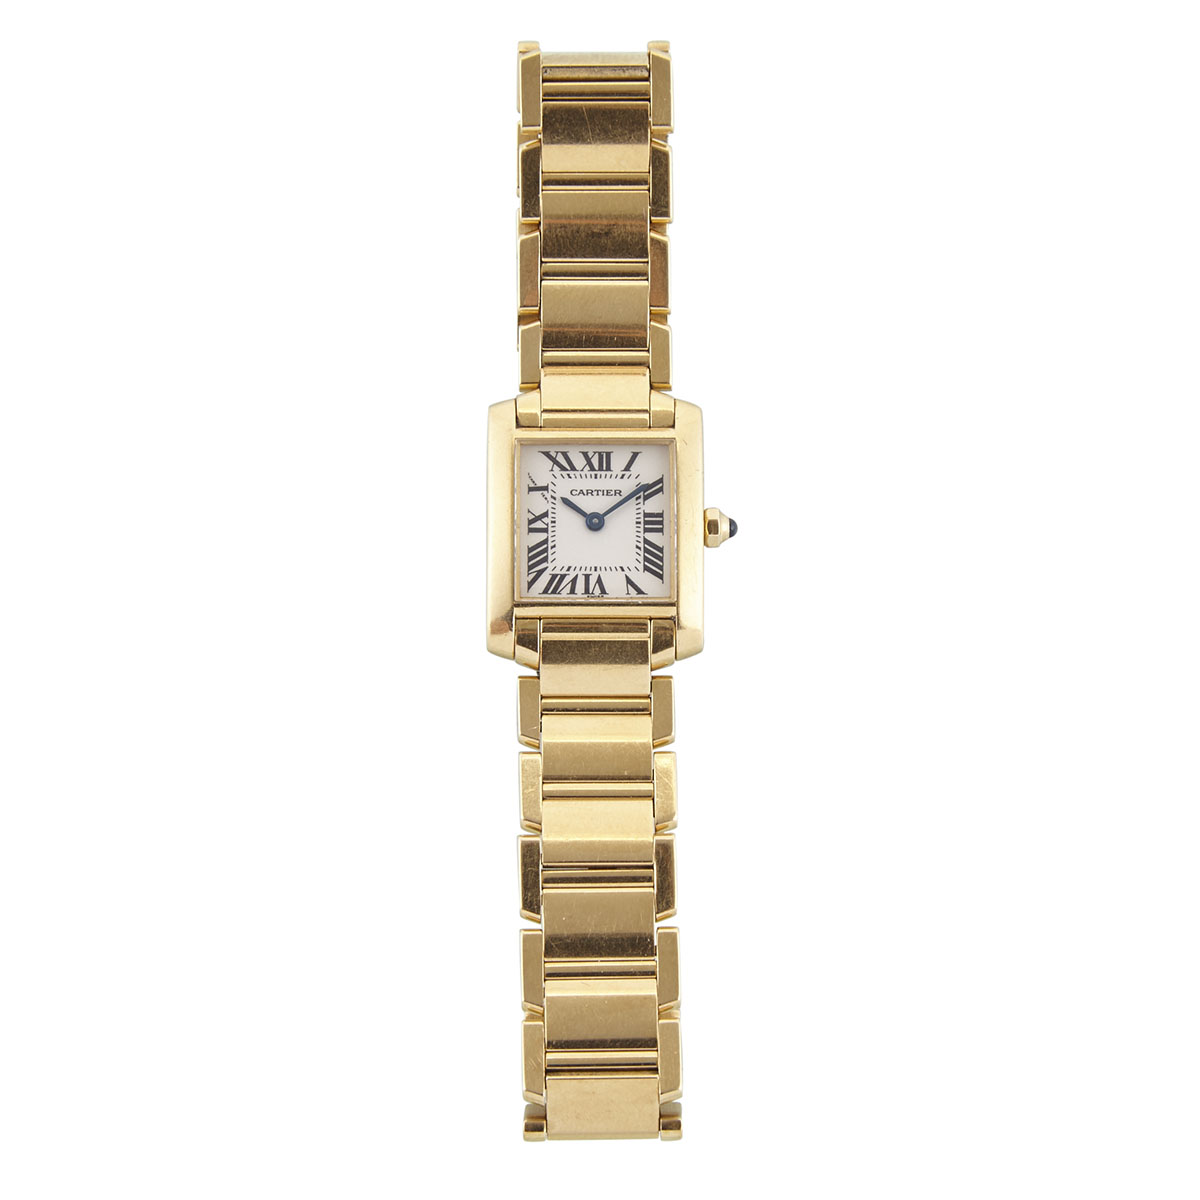 Lady’s Cartier Tank Francaise Wristwatch